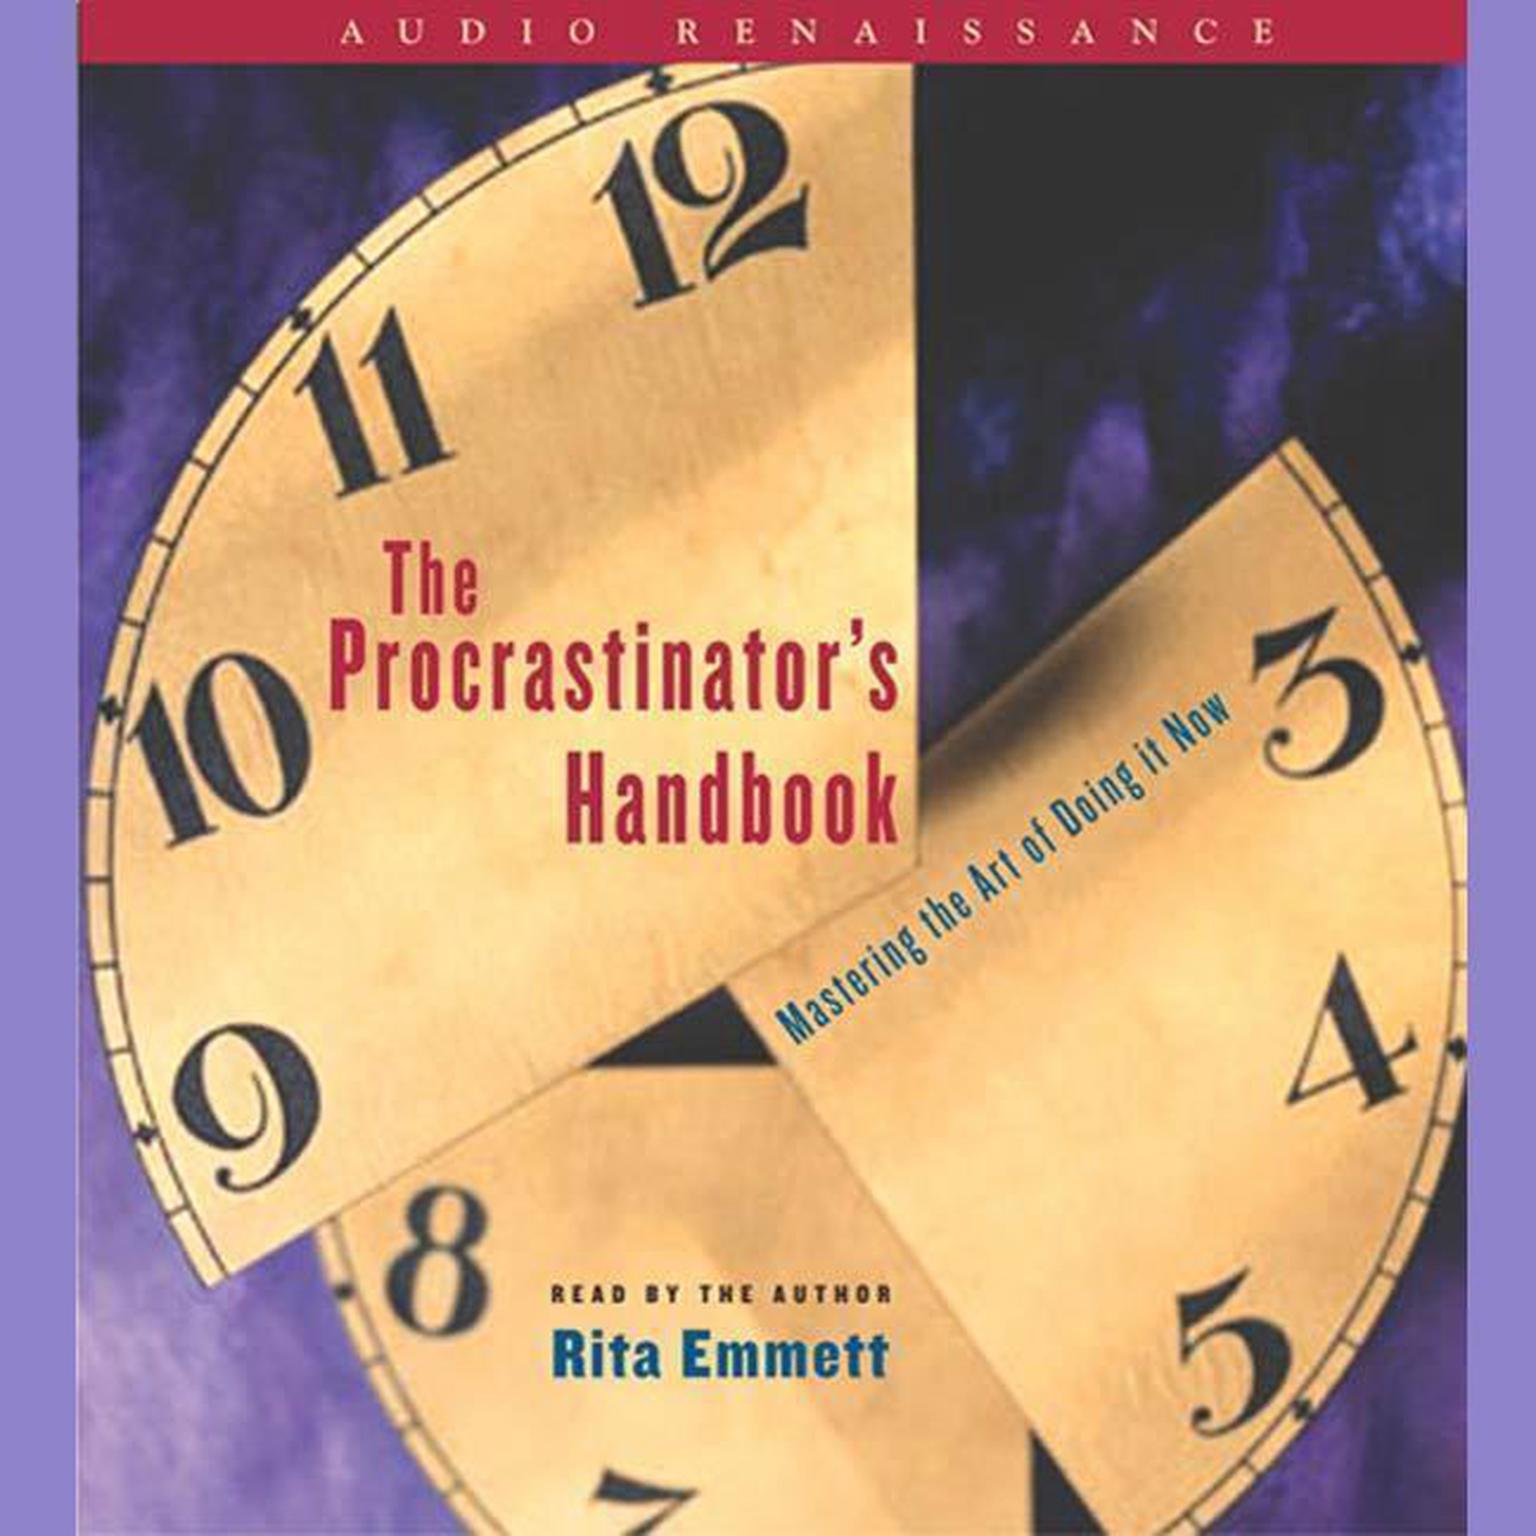 The Procrastinators Handbook (Abridged): Mastering the Art of Doing It Now Audiobook, by Rita Emmett